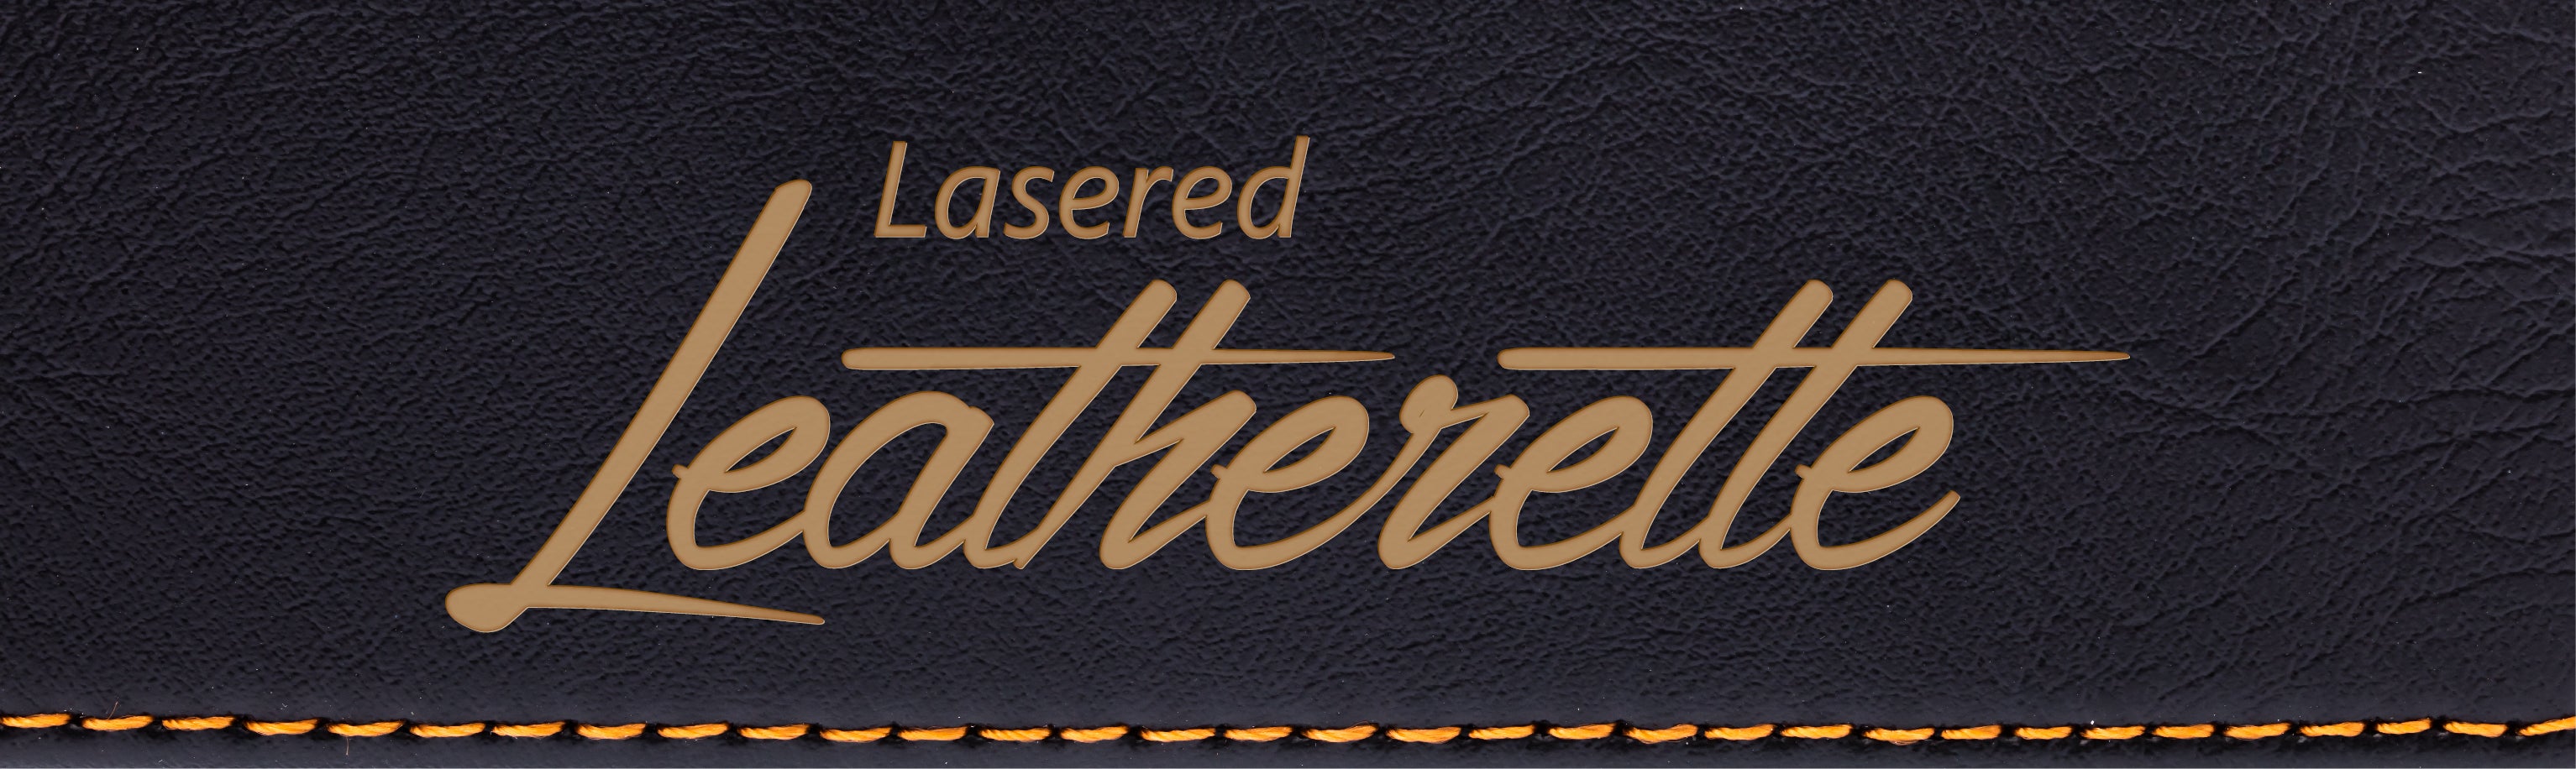 Laserable Leatherette